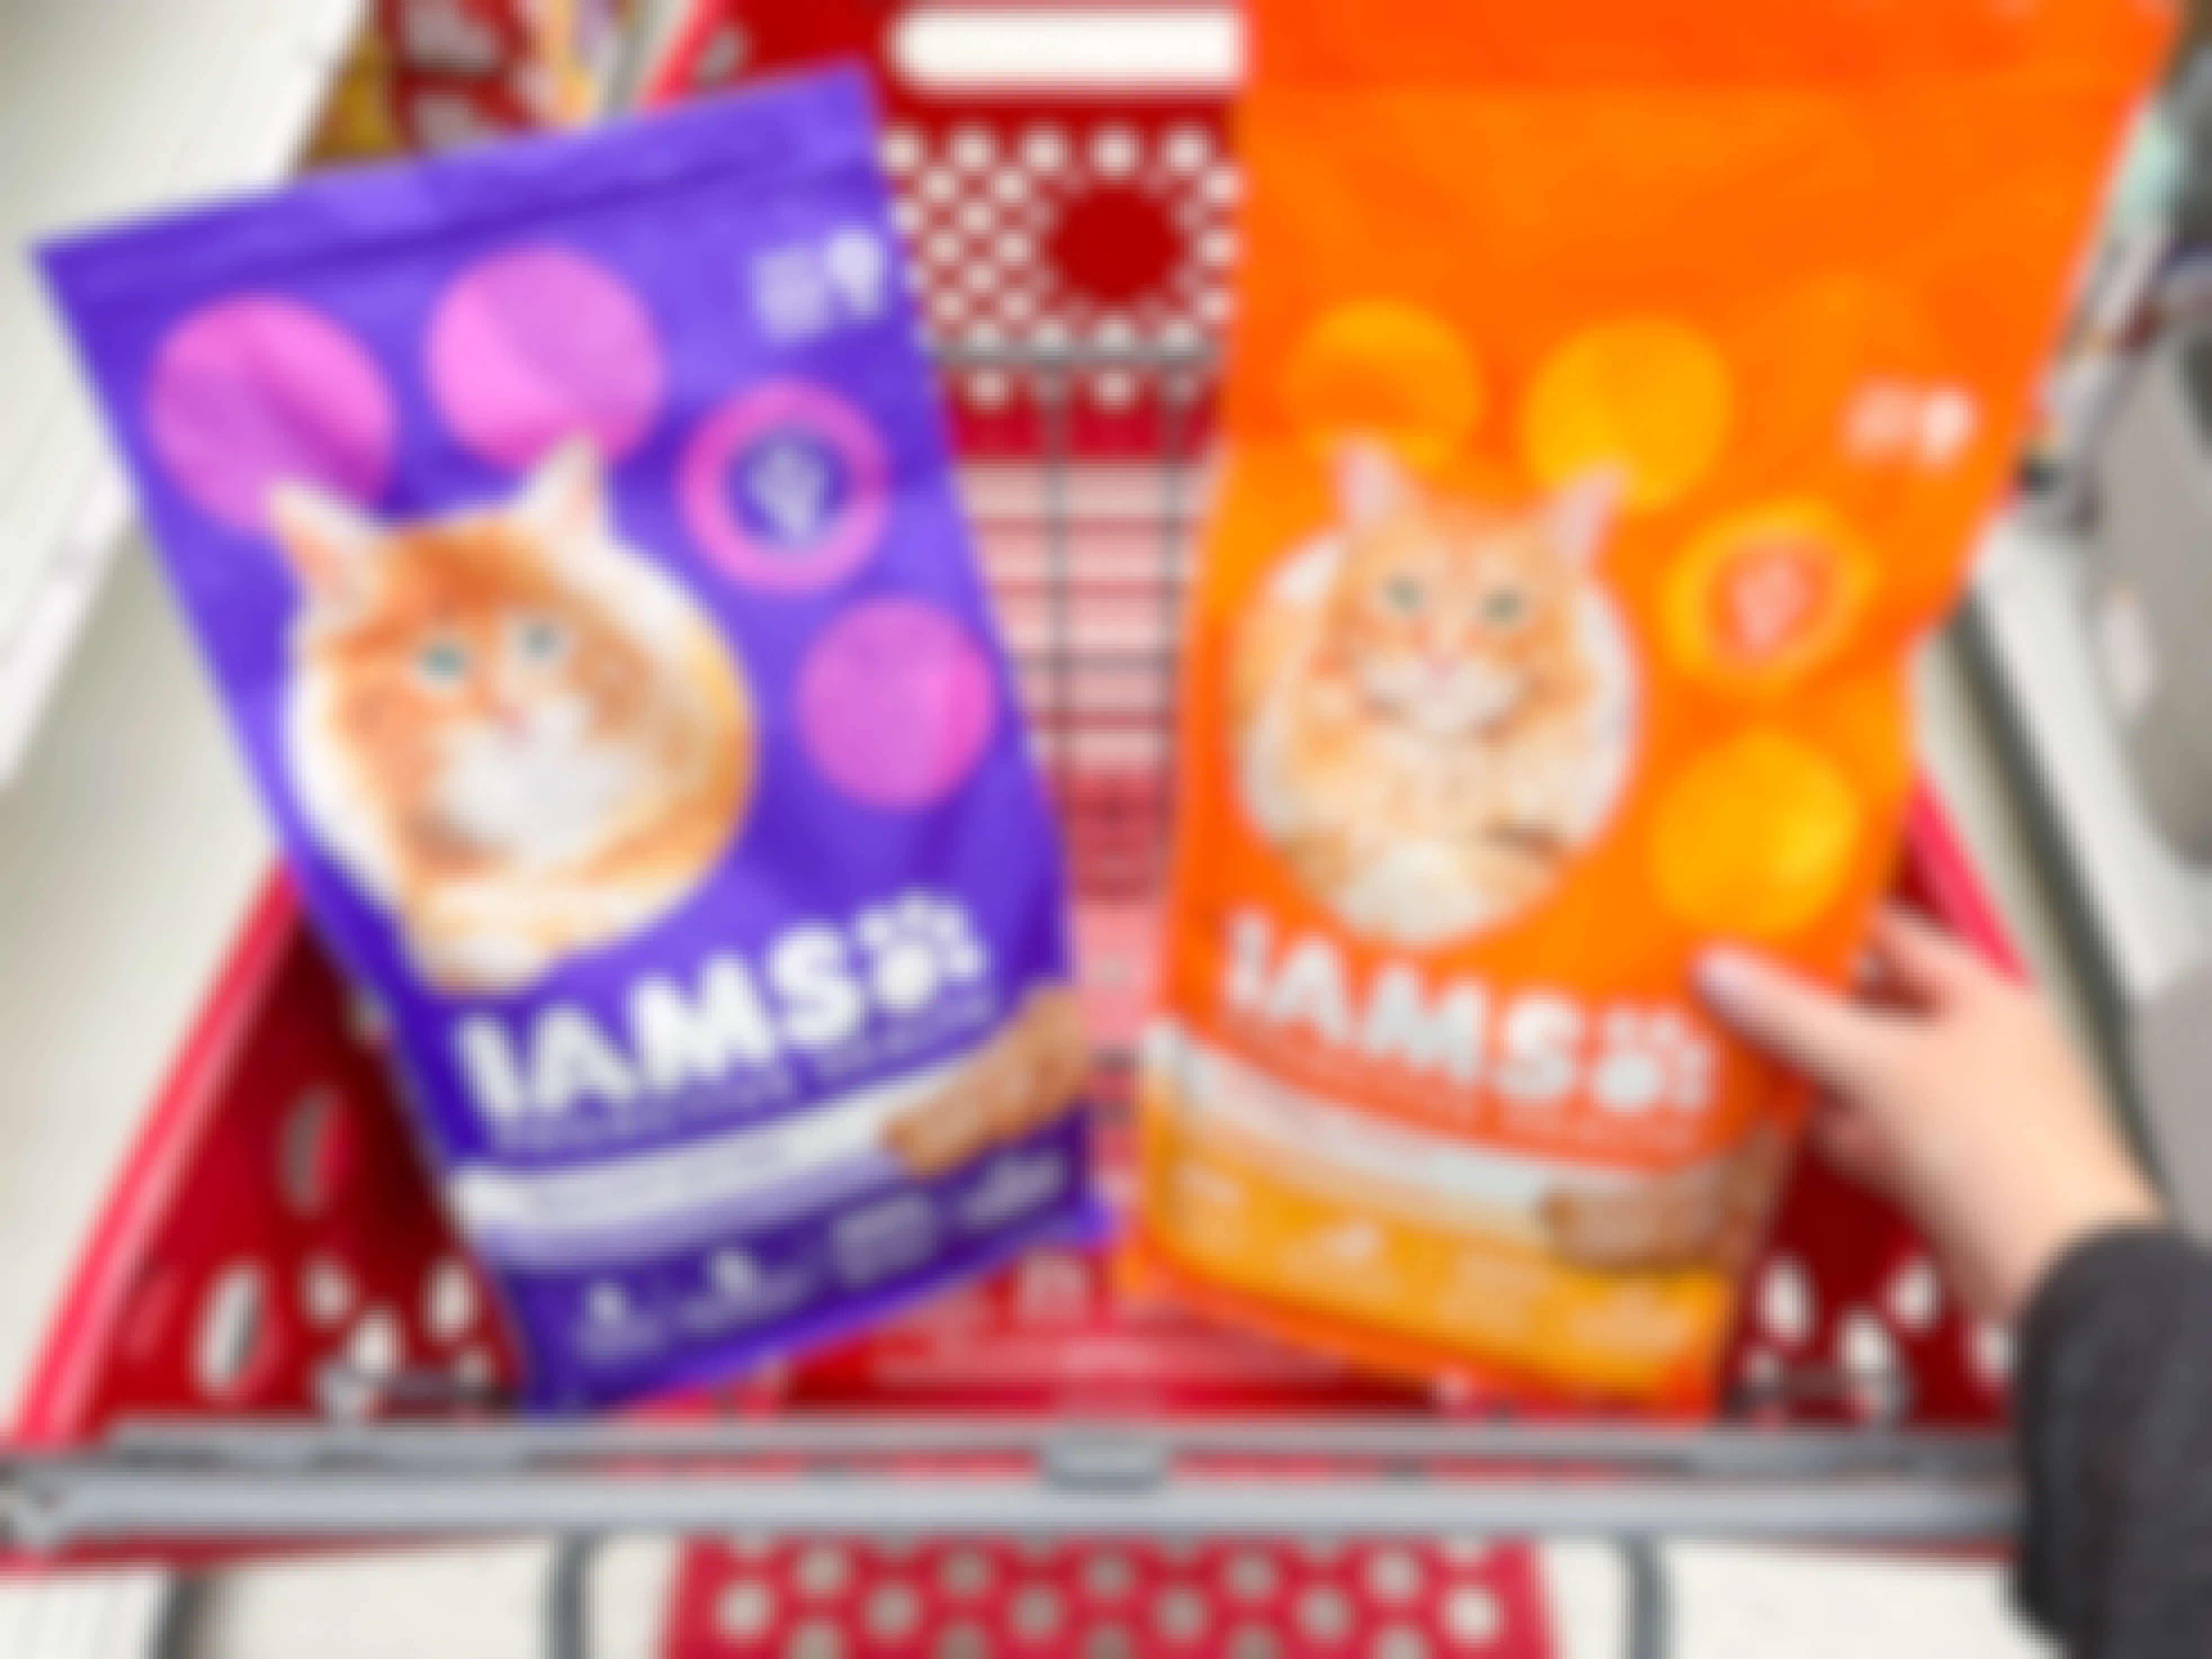 kitten and adult varieties of iams dry cat food in target cart